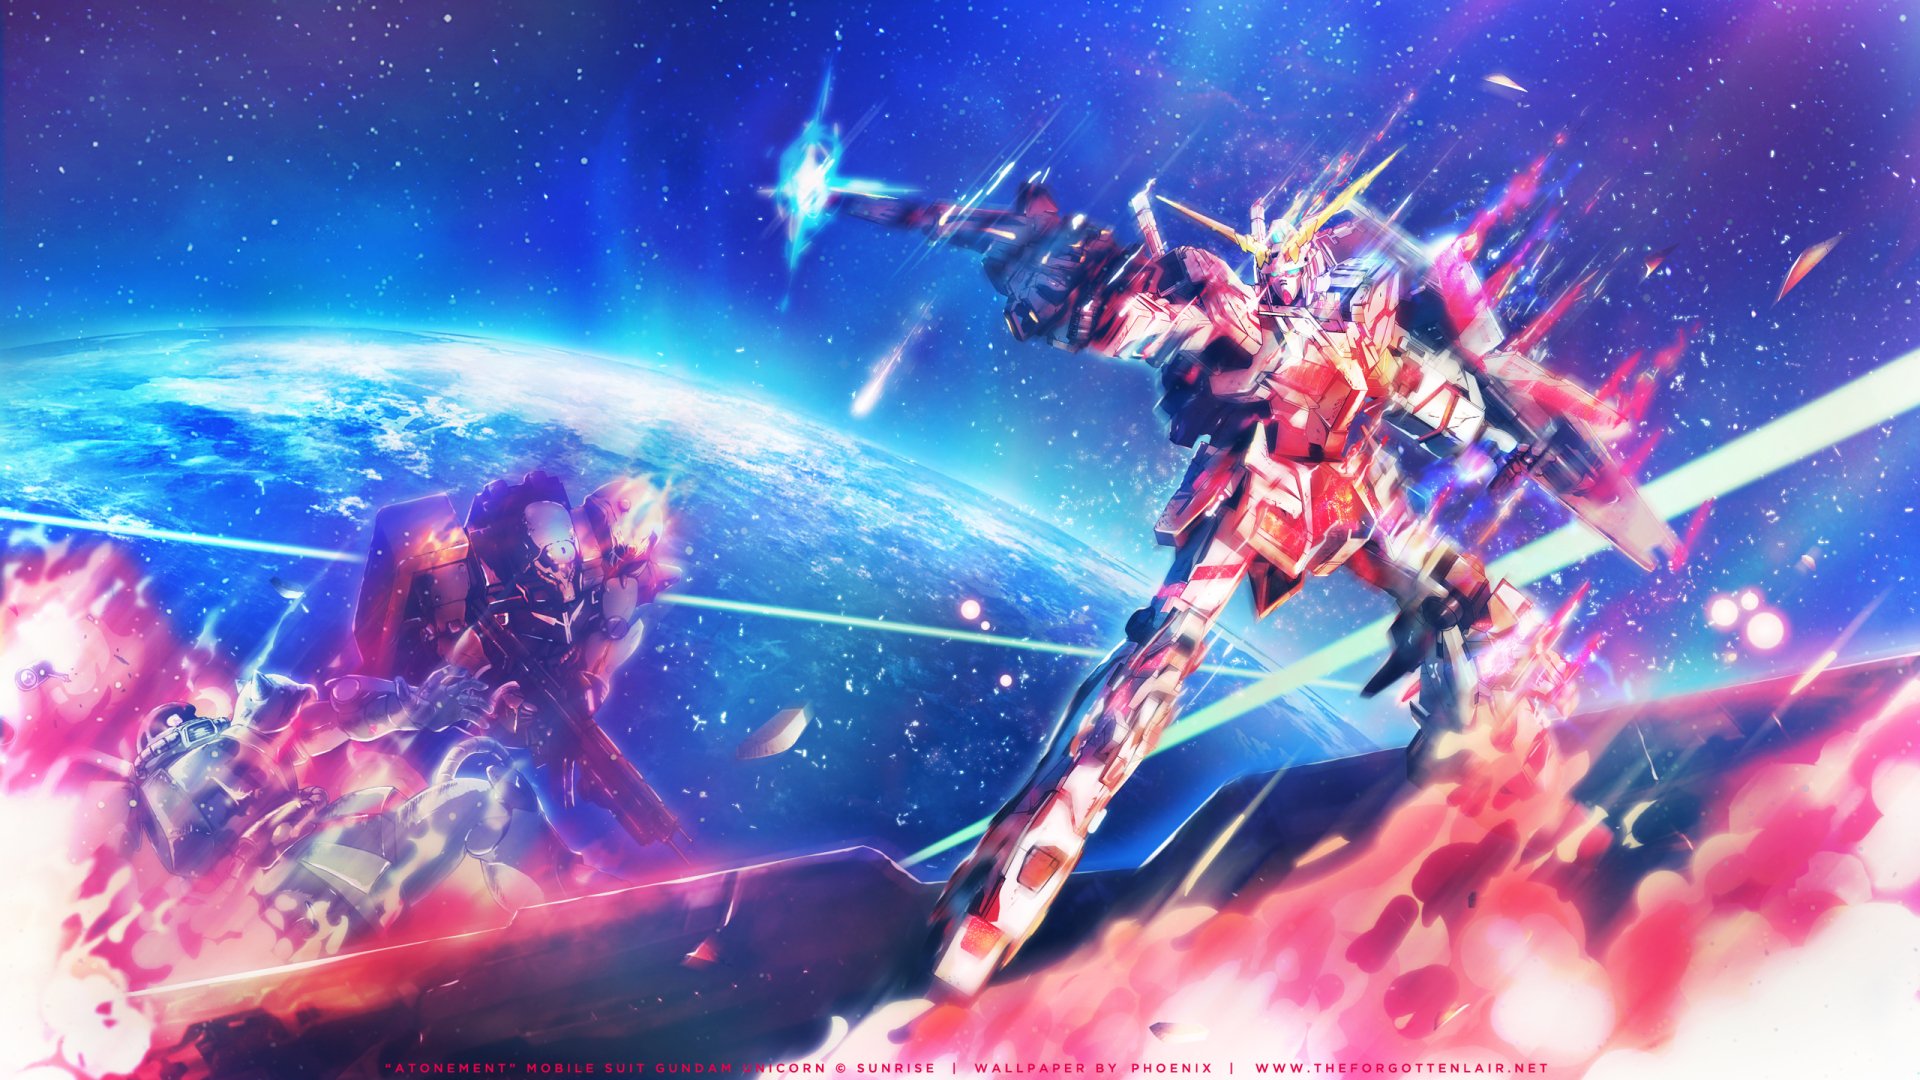 Mobile Suit Gundam NT BD